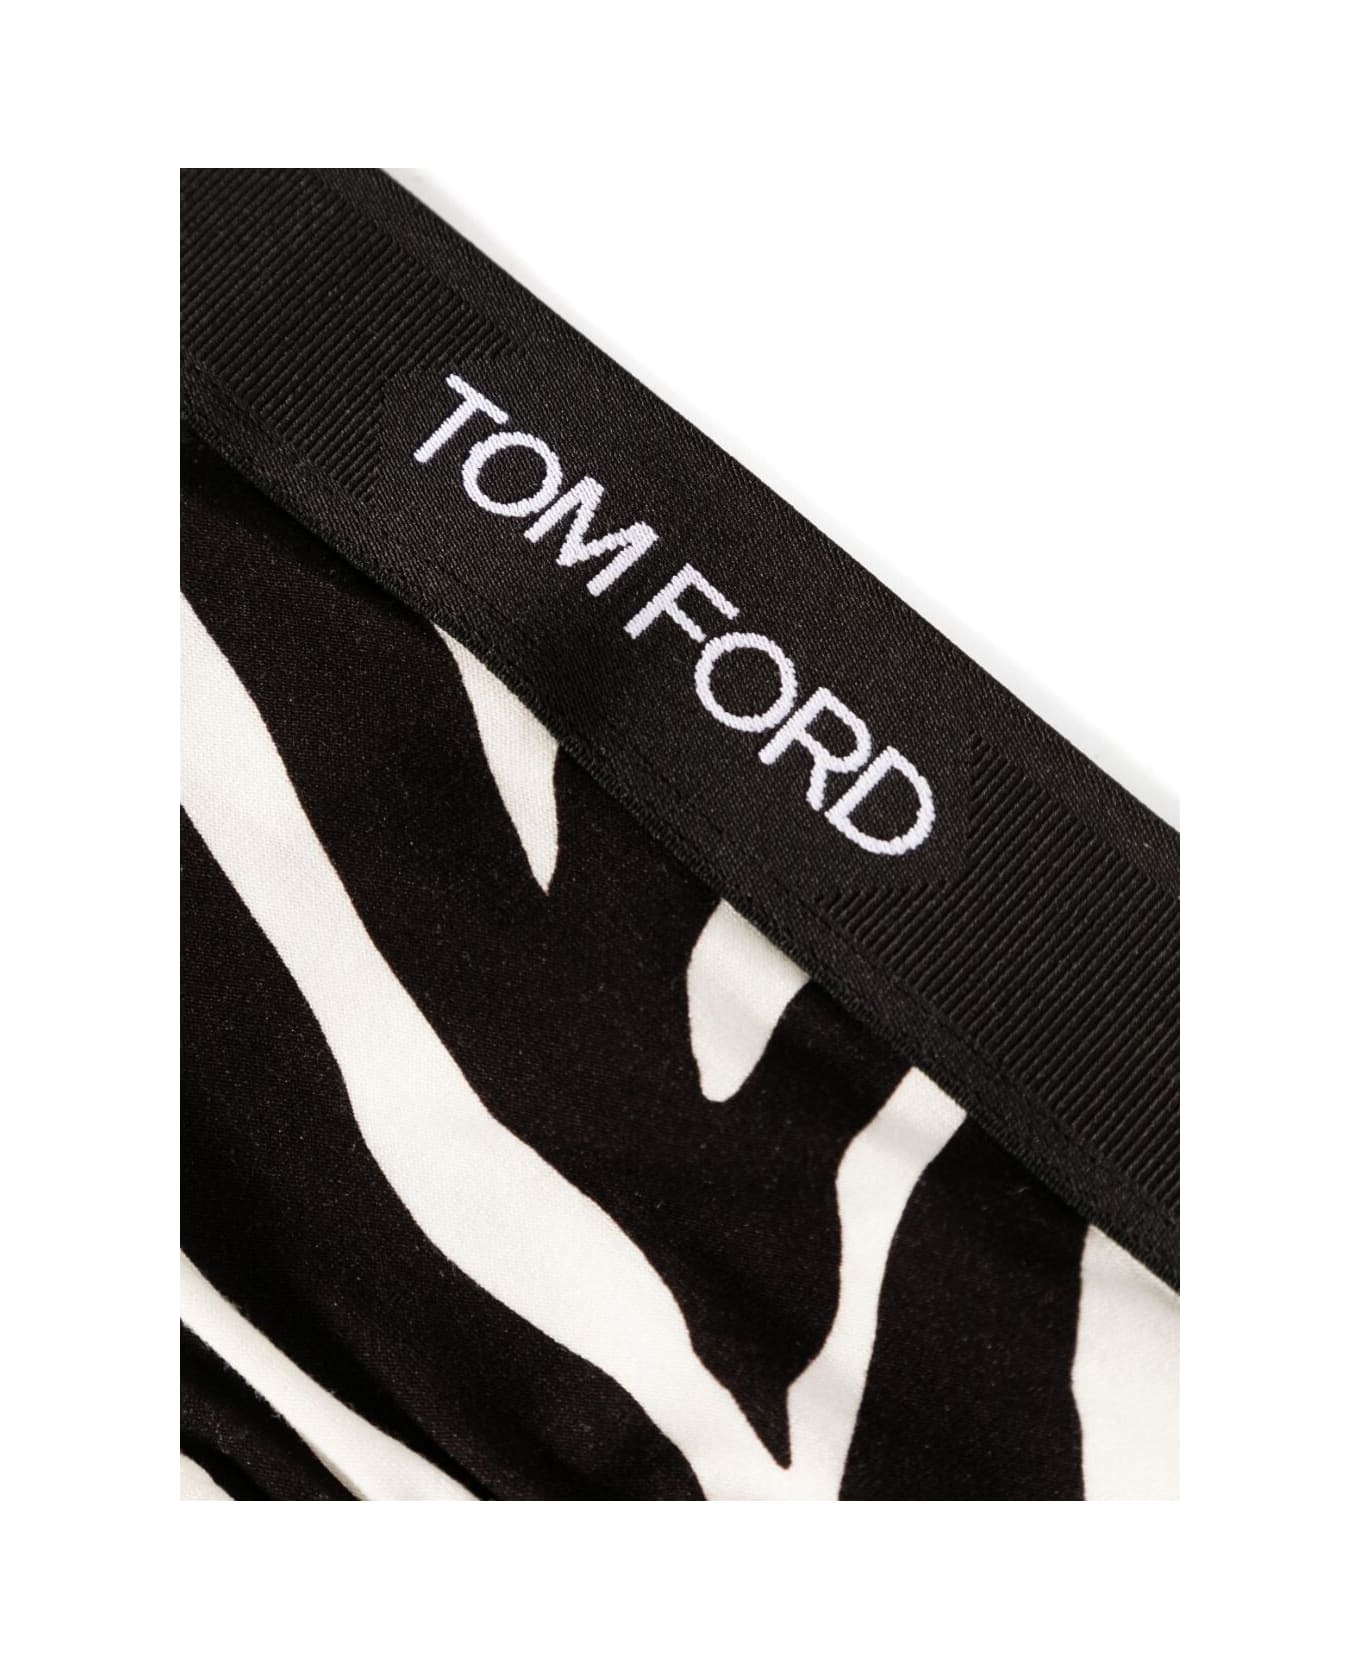 Tom Ford Optical Zebra Printed Modal Signature Thong - Xecbl Ecru Black ショーツ